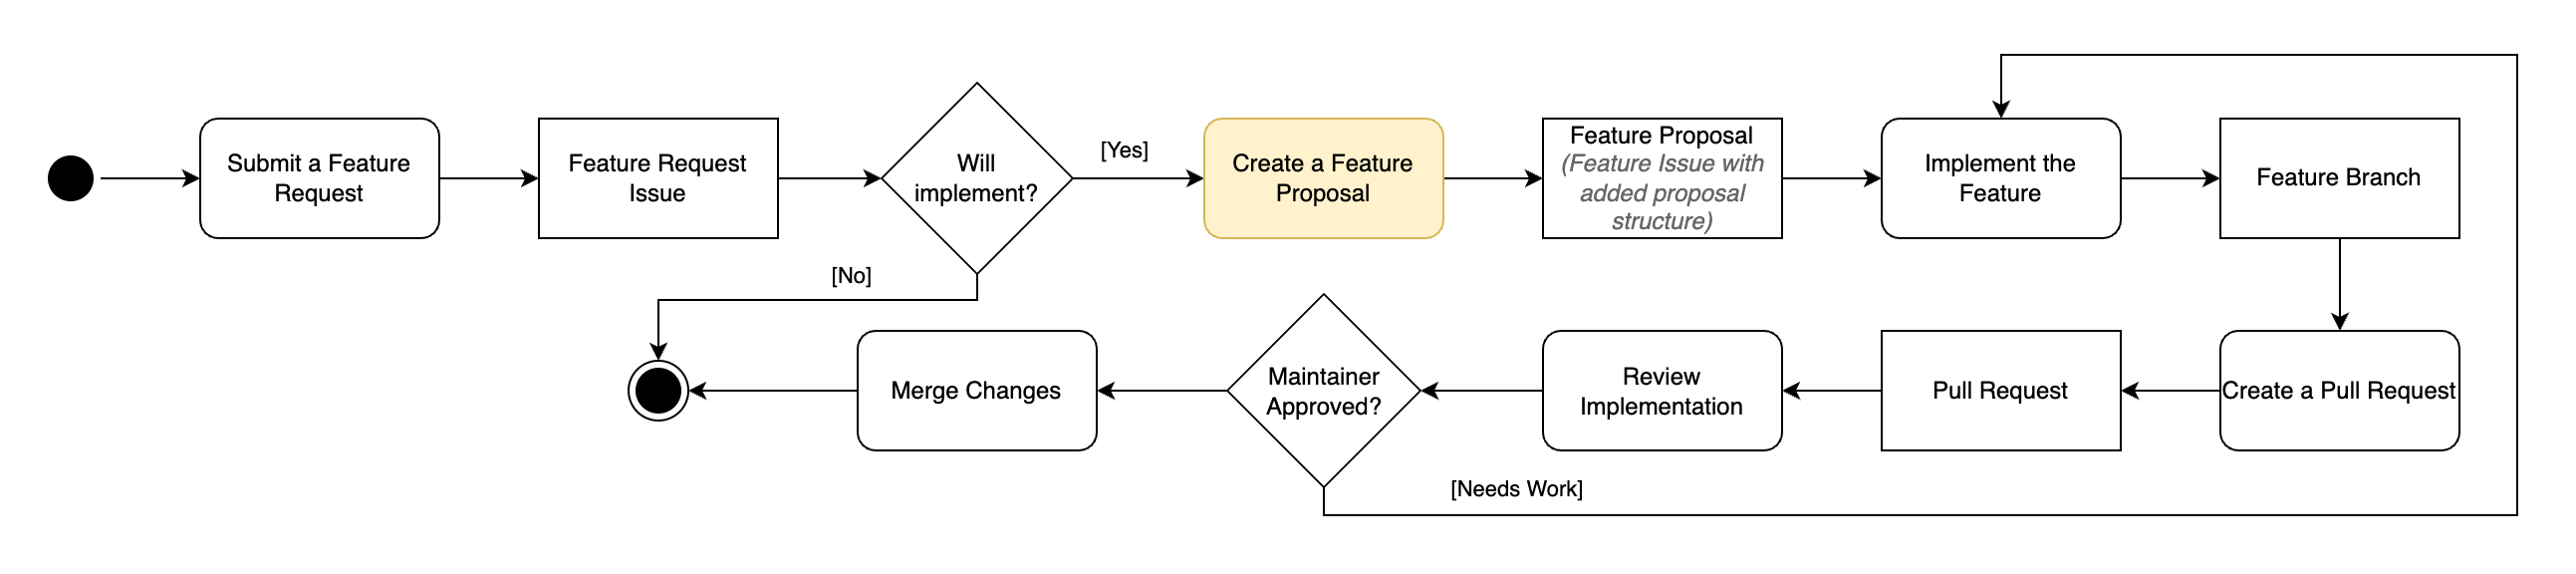 Artemis Process Model - Activity Diagram